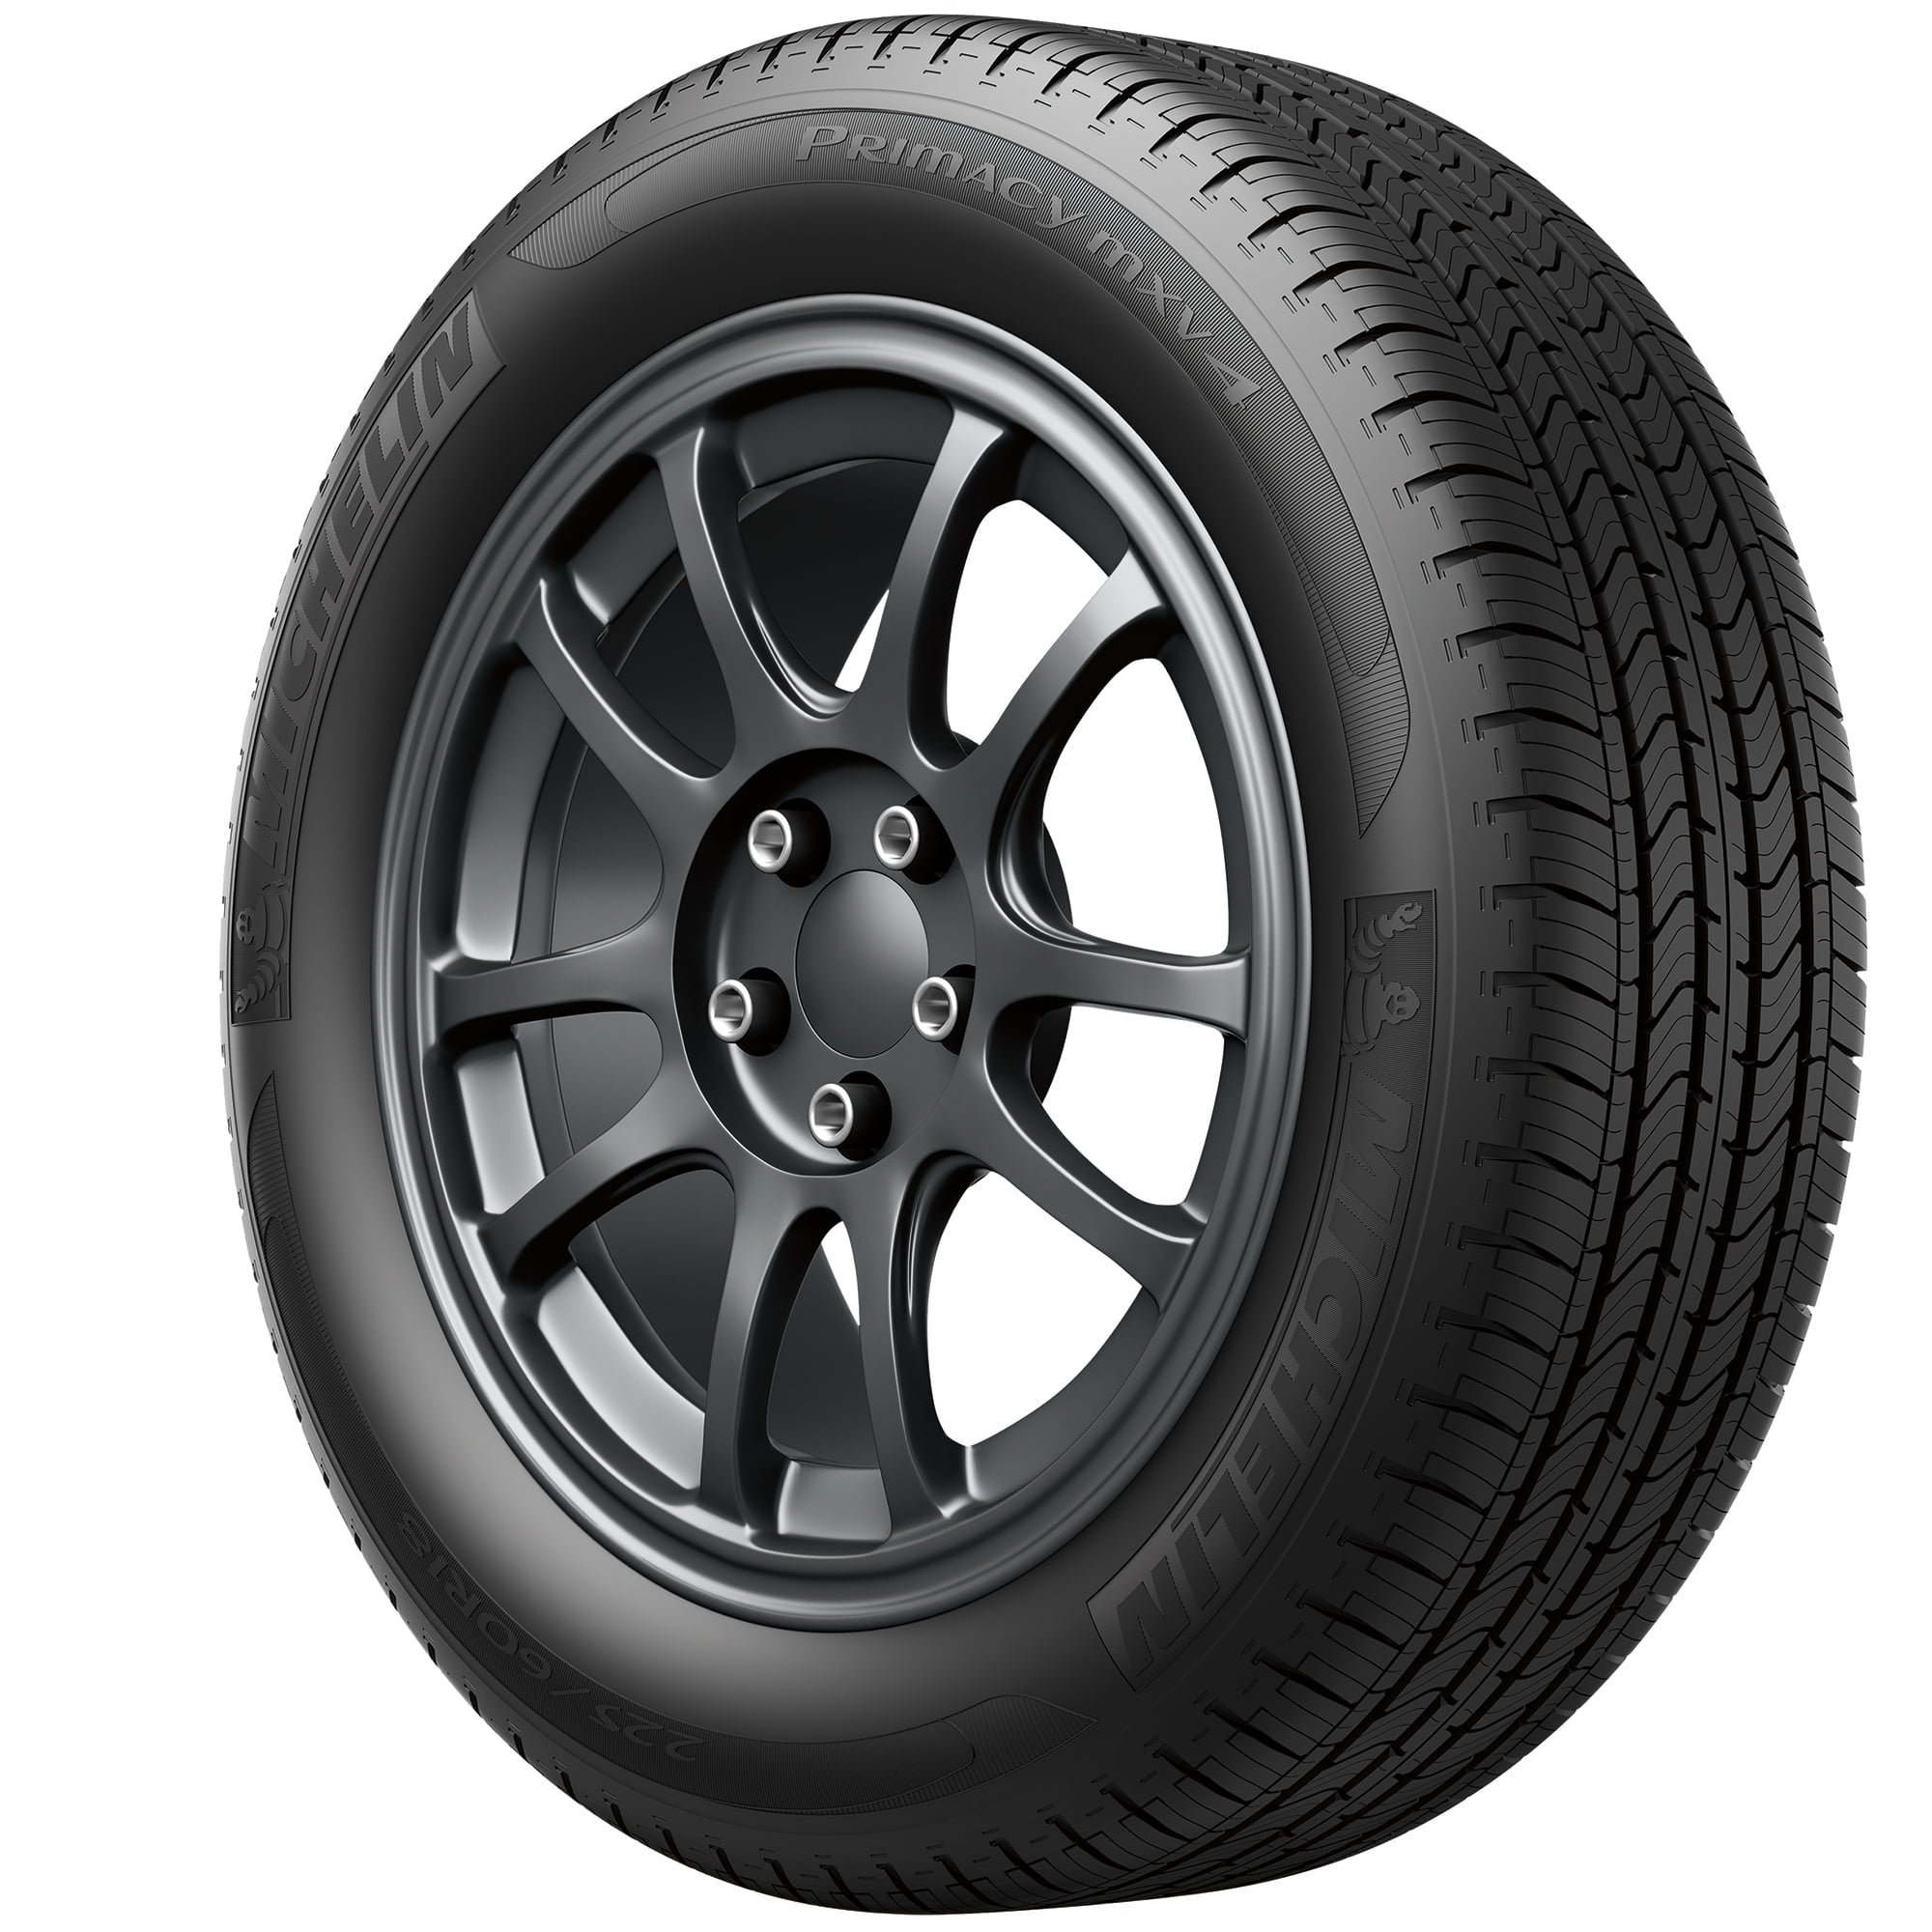 Michelin Primacy MXV4 All Season P215/55R17 93V Passenger Tire